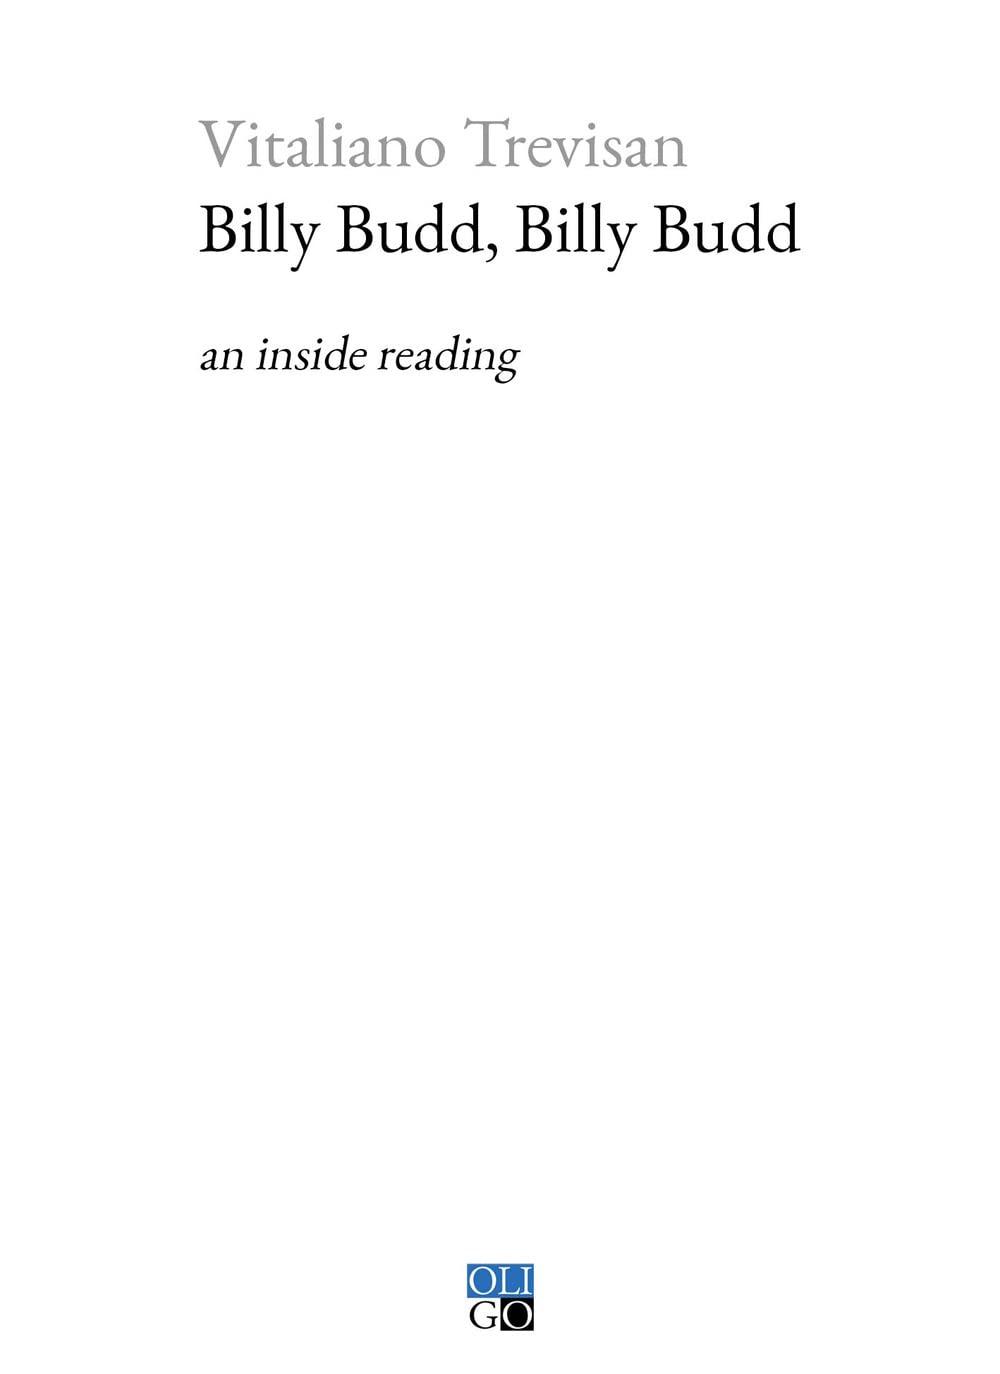 Libro "Billy Budd, Billy Budd. An inside reading" di Vitaliano Trevisan